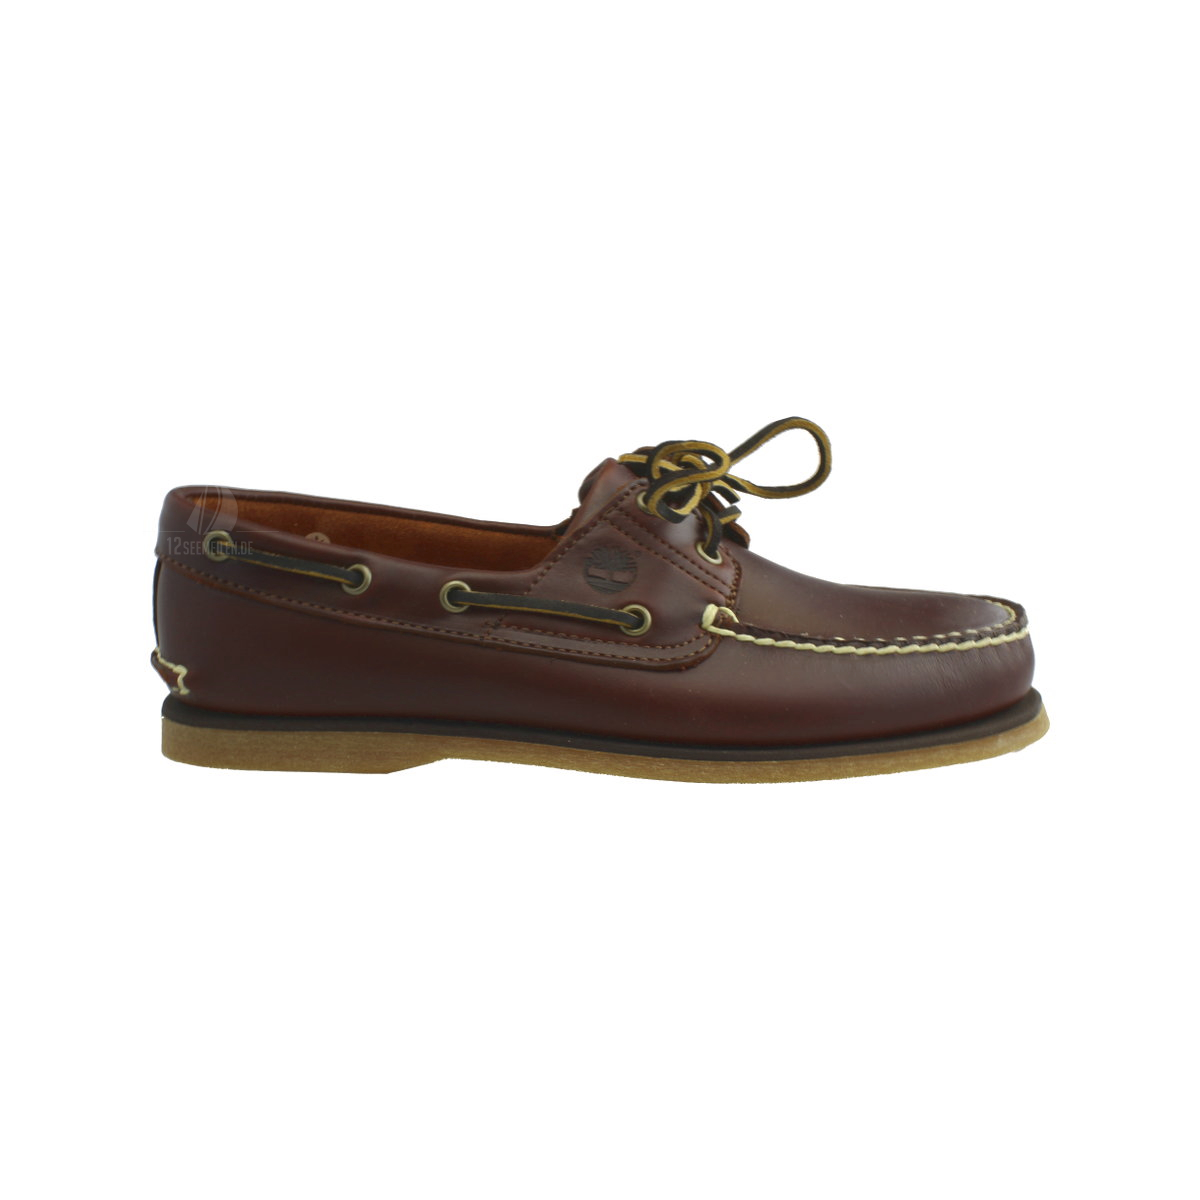 Timberland Classic Boat chaussures bateau Hommes brun - rouge eu 45 ( us 11 )